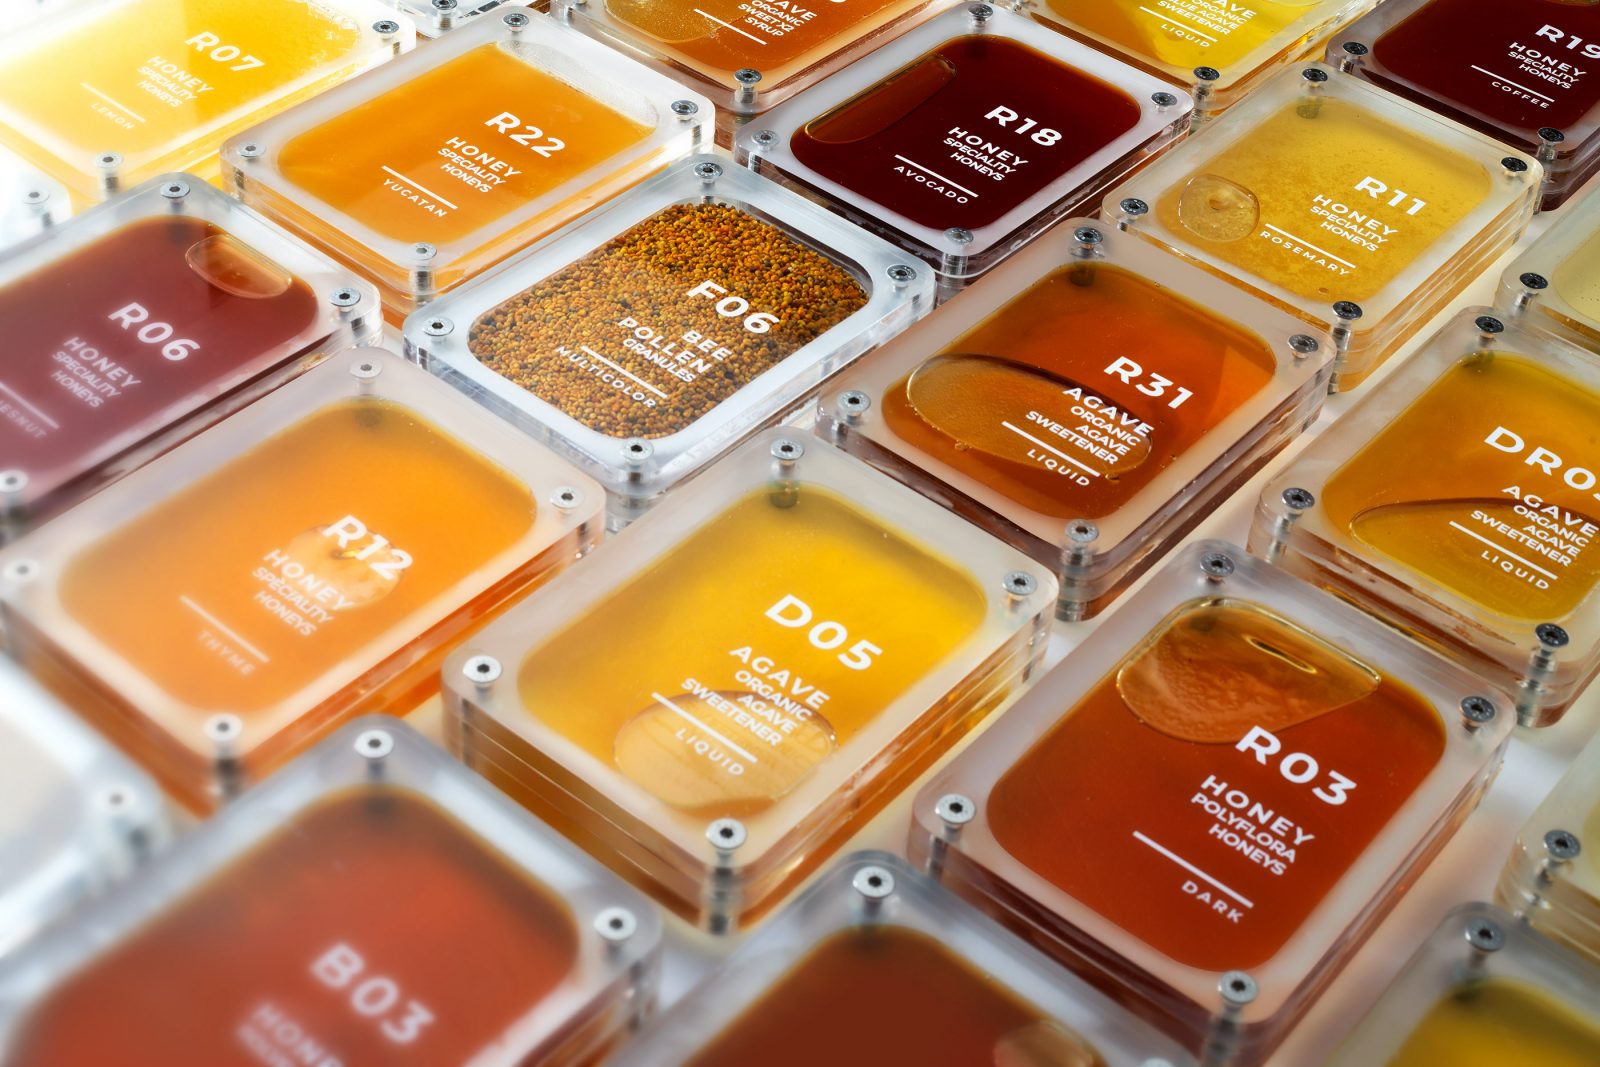 most beautiful Honey Packaging Designs